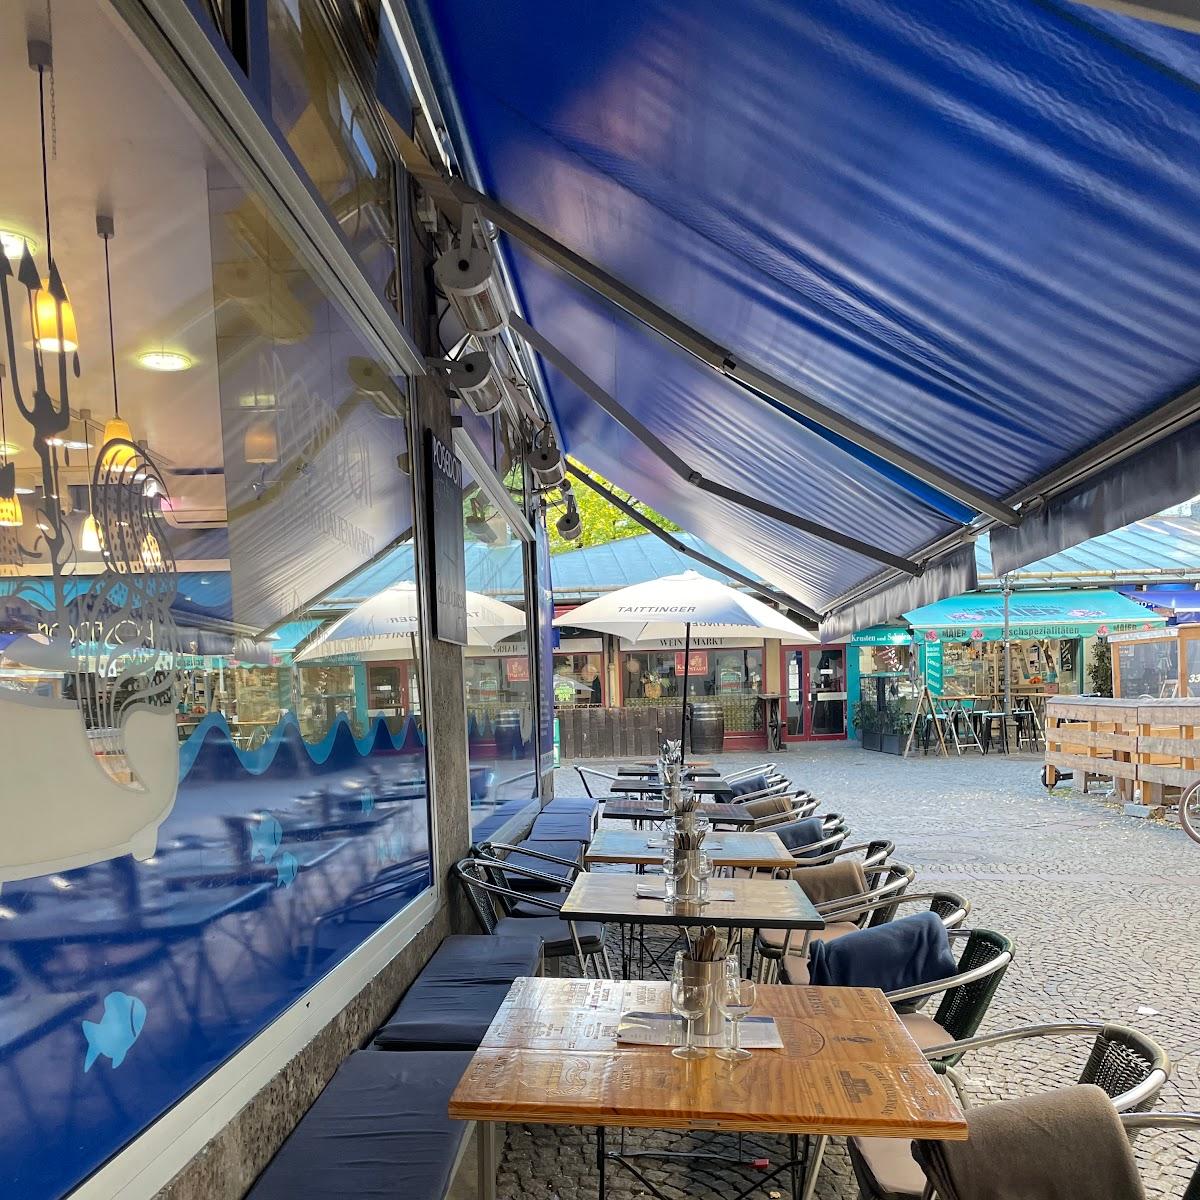 Restaurant "Poseidon am Viktualienmarkt" in München